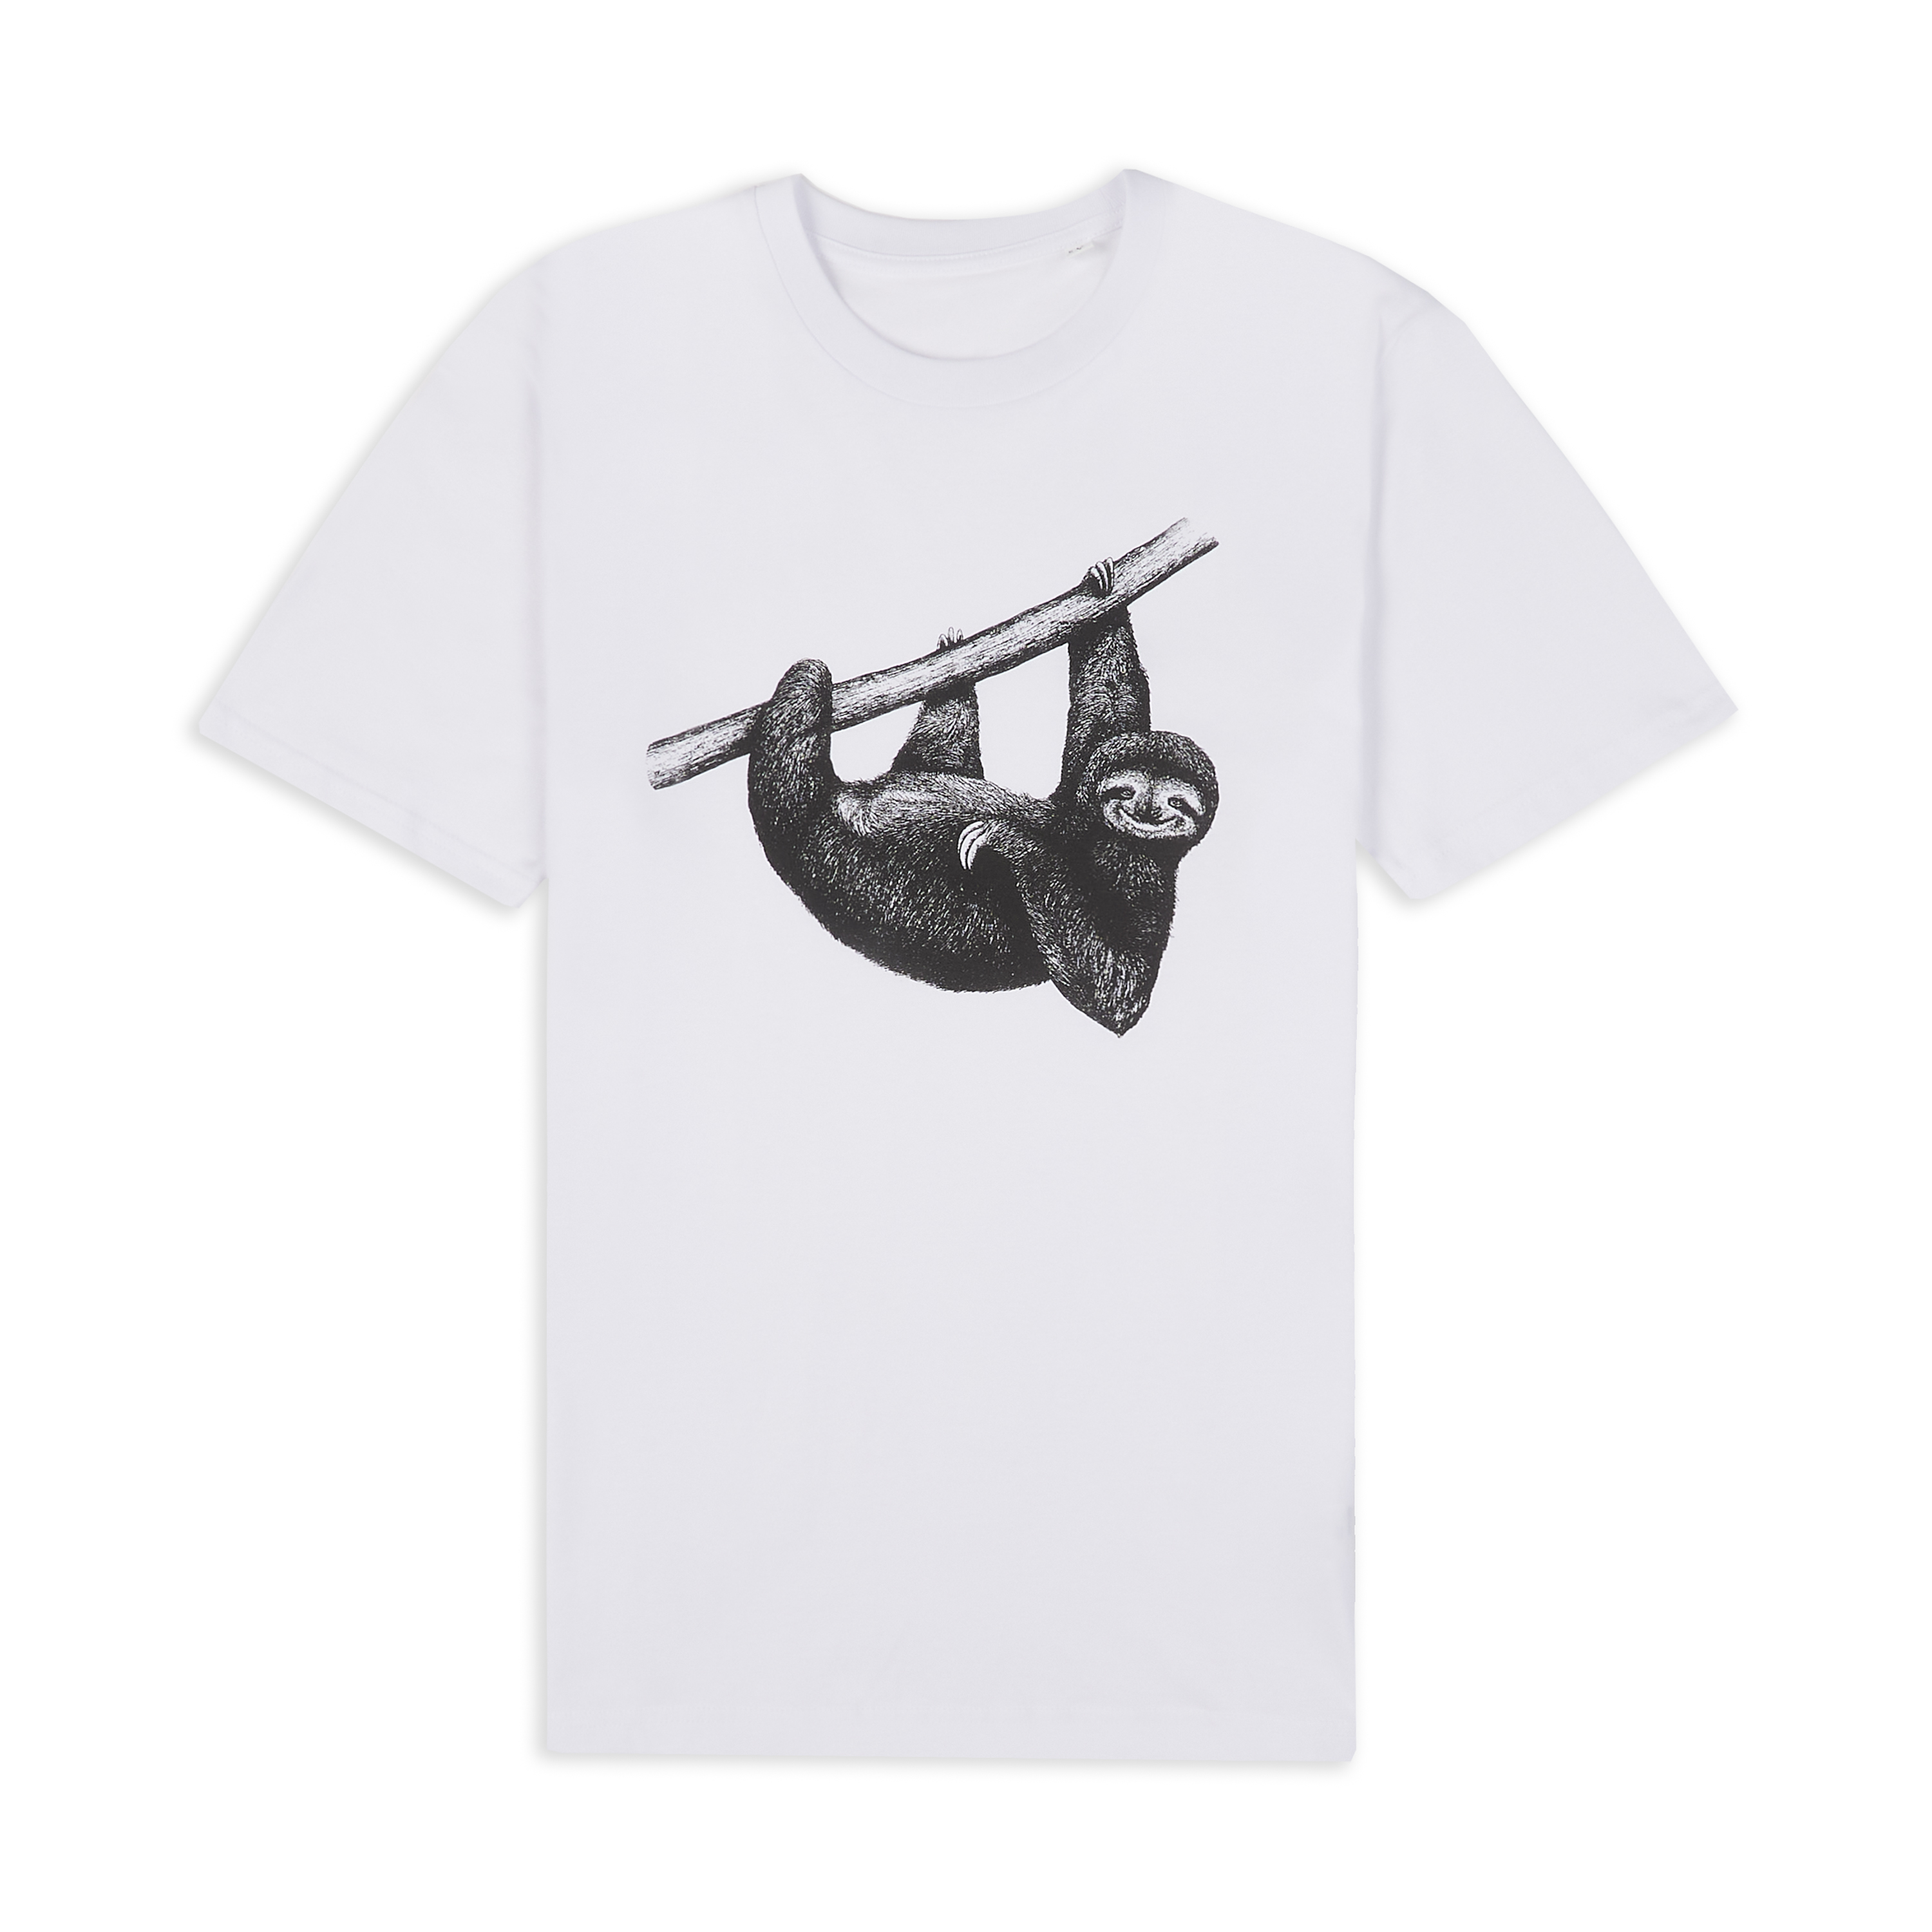 DIOR Saddle Bag Printed Tshirt  Moretti Menswear  Facebook